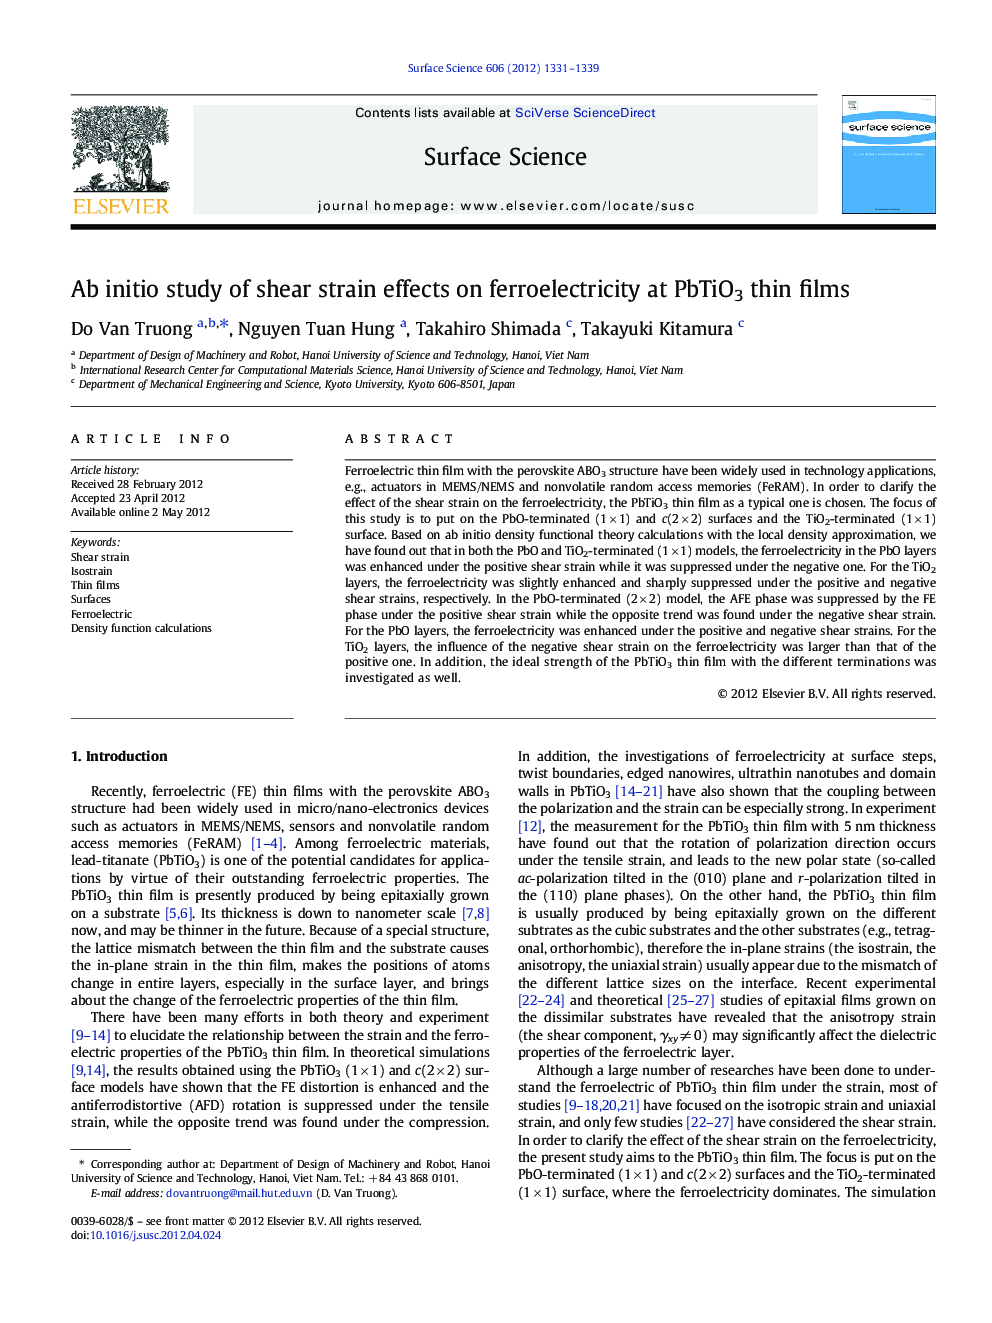 Ab initio study of shear strain effects on ferroelectricity at PbTiO3 thin films